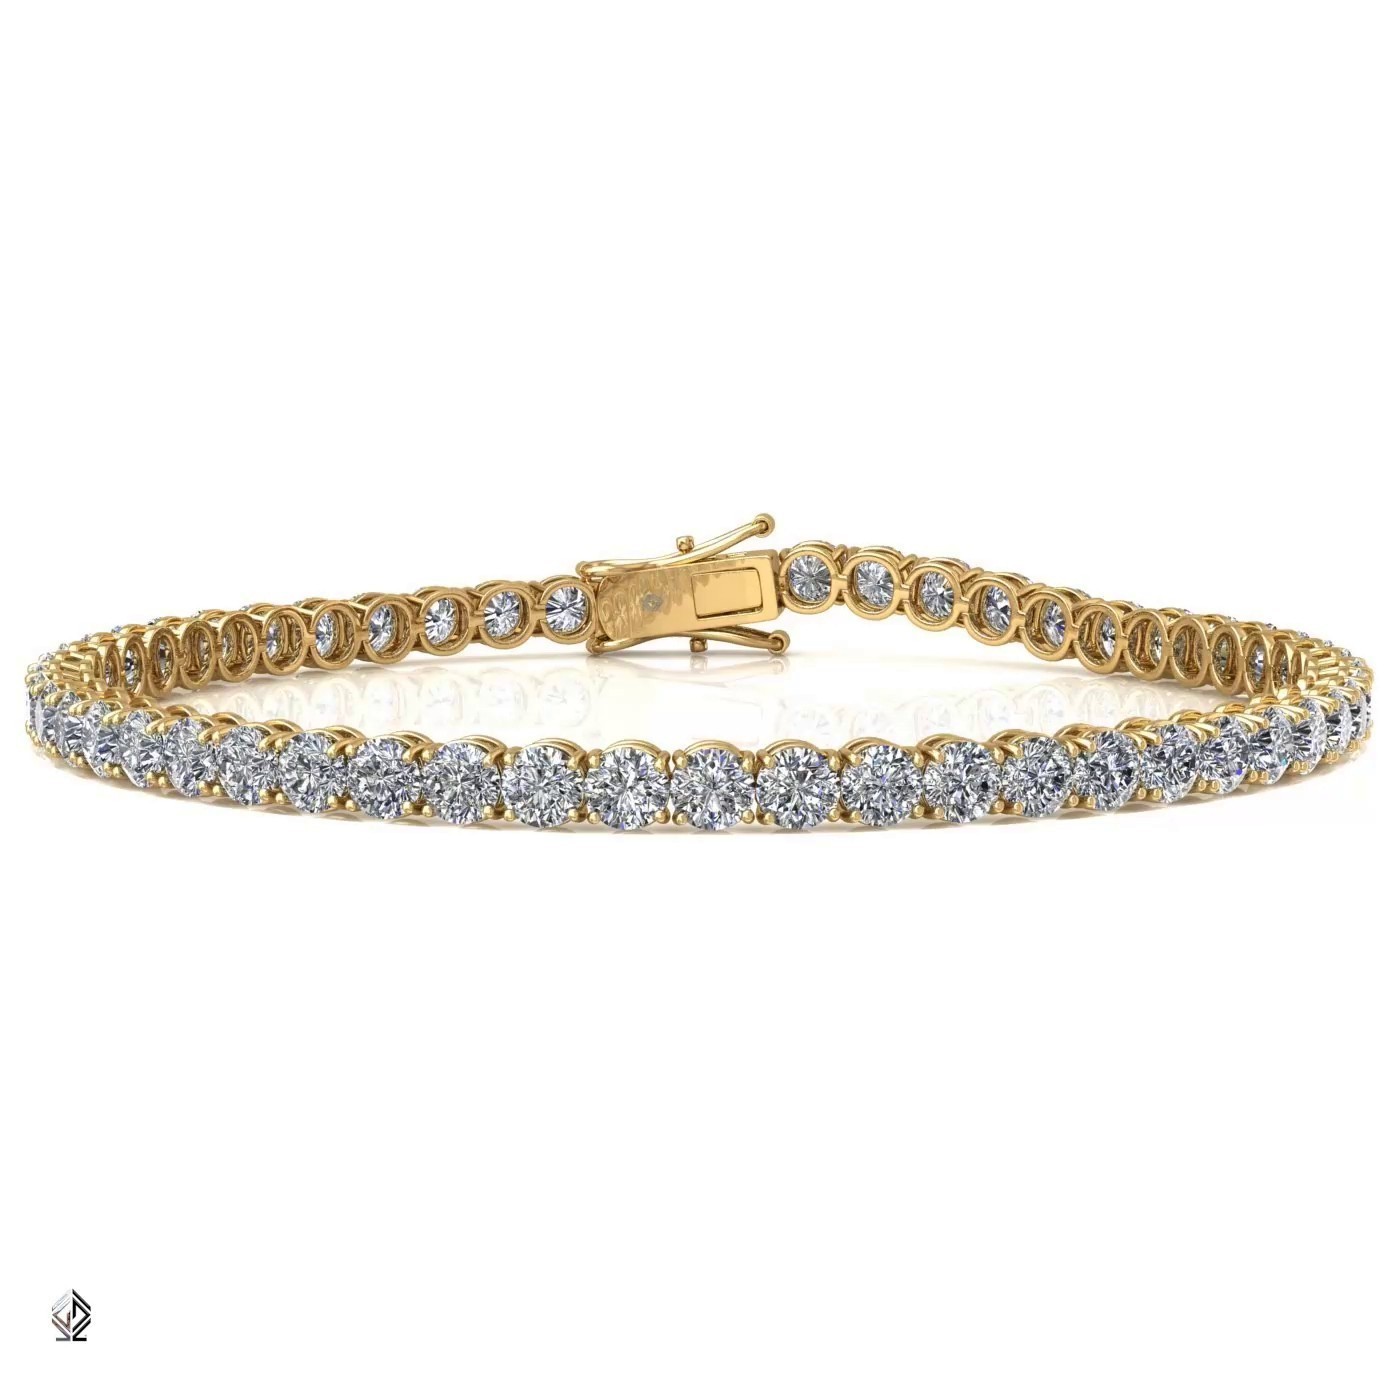 18k white gold 2.8 mm 4 prong round shape diamond tennis bracelet in round setting Photos & images